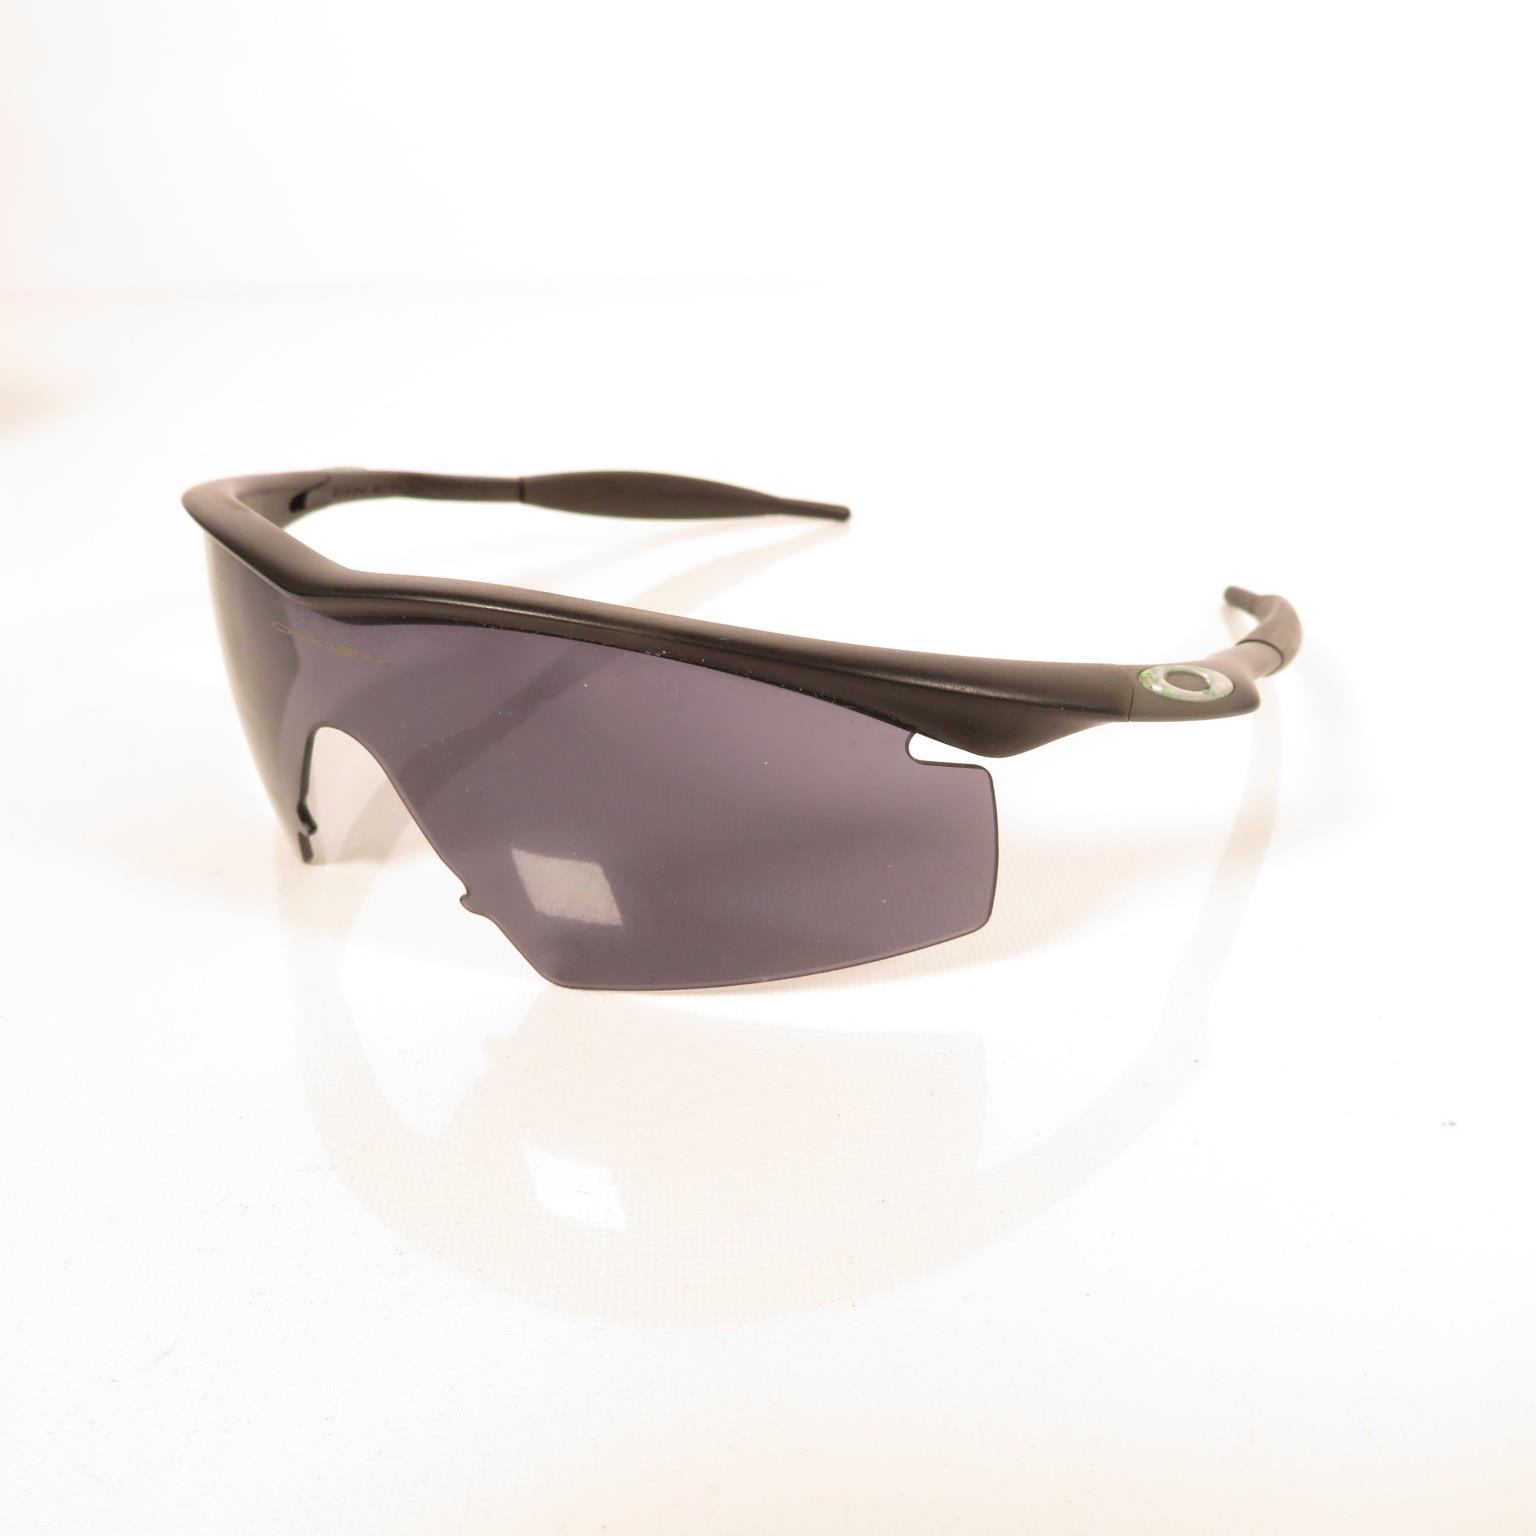 Pair of Porsche Folding Sunglasses, Per Sol folding Sunglasses, Oakley sunglasses and Porsche design - Image 4 of 17